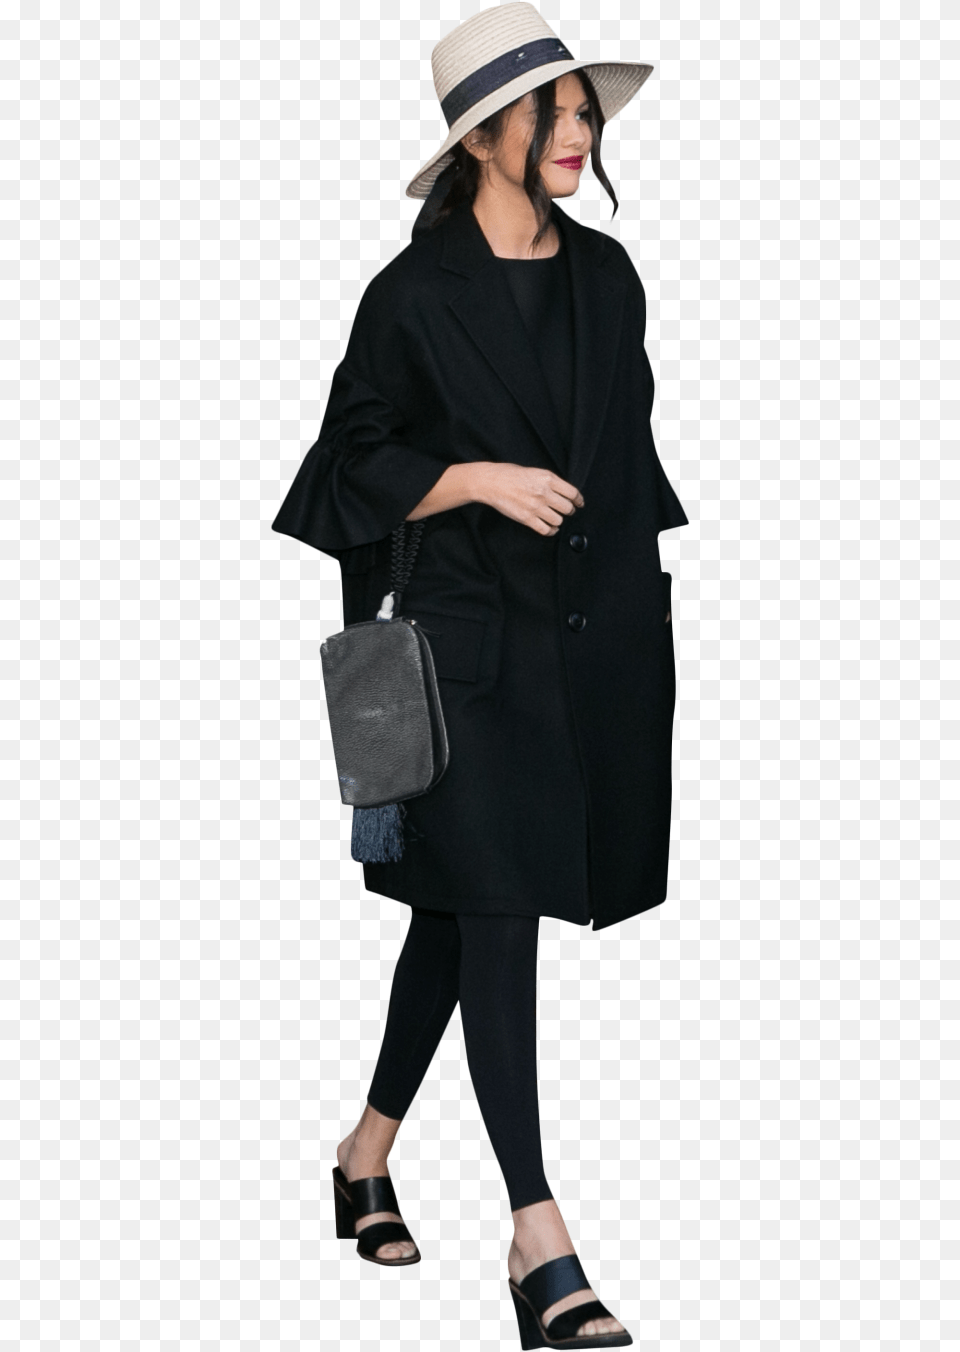 Selena Gomez Black Dress Image Tights, Accessories, Bag, Clothing, Coat Free Png